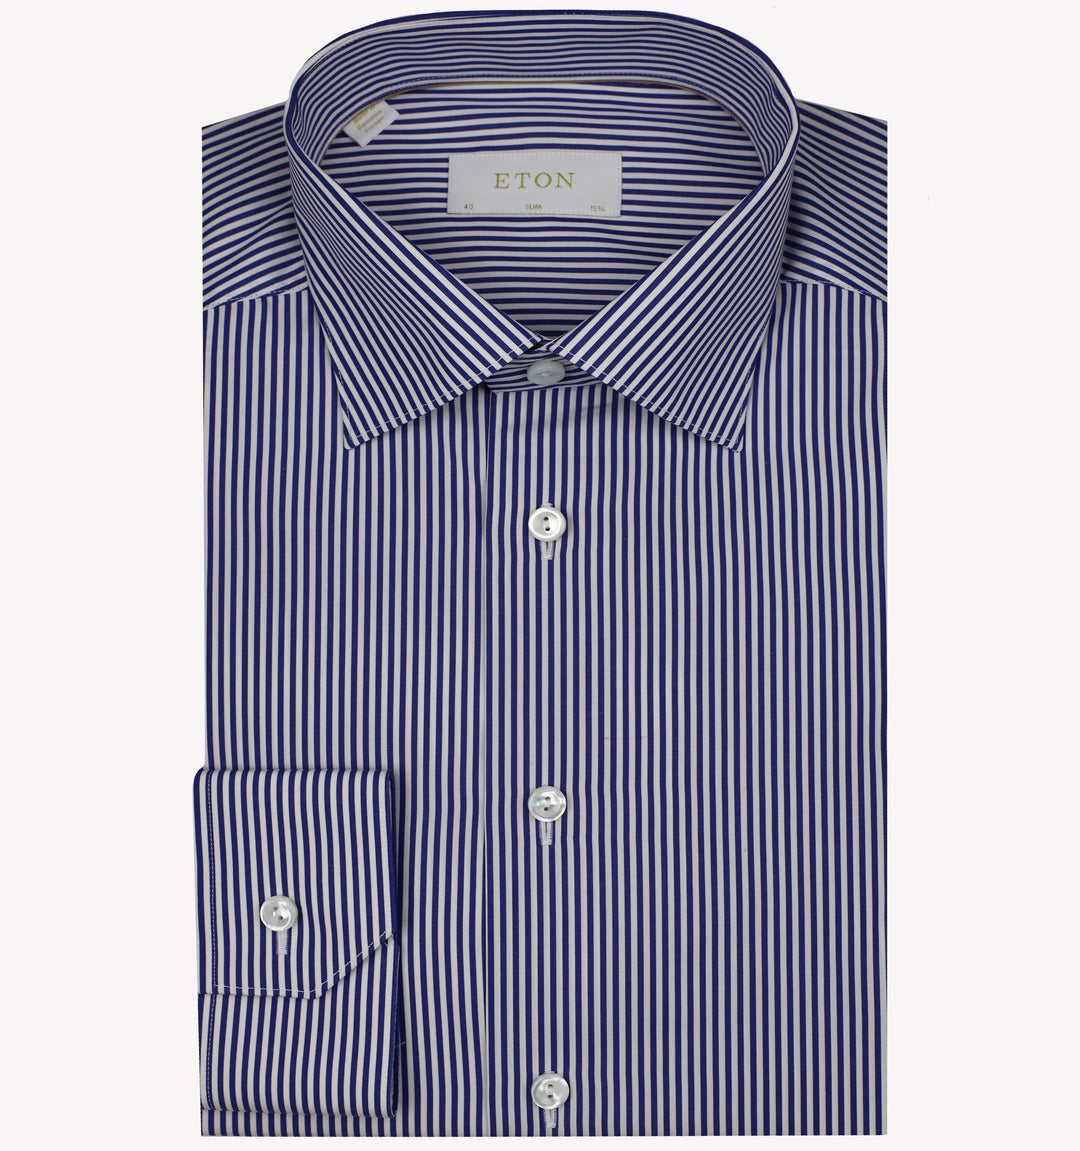 Eton Stripe Dress Shirt in Blue